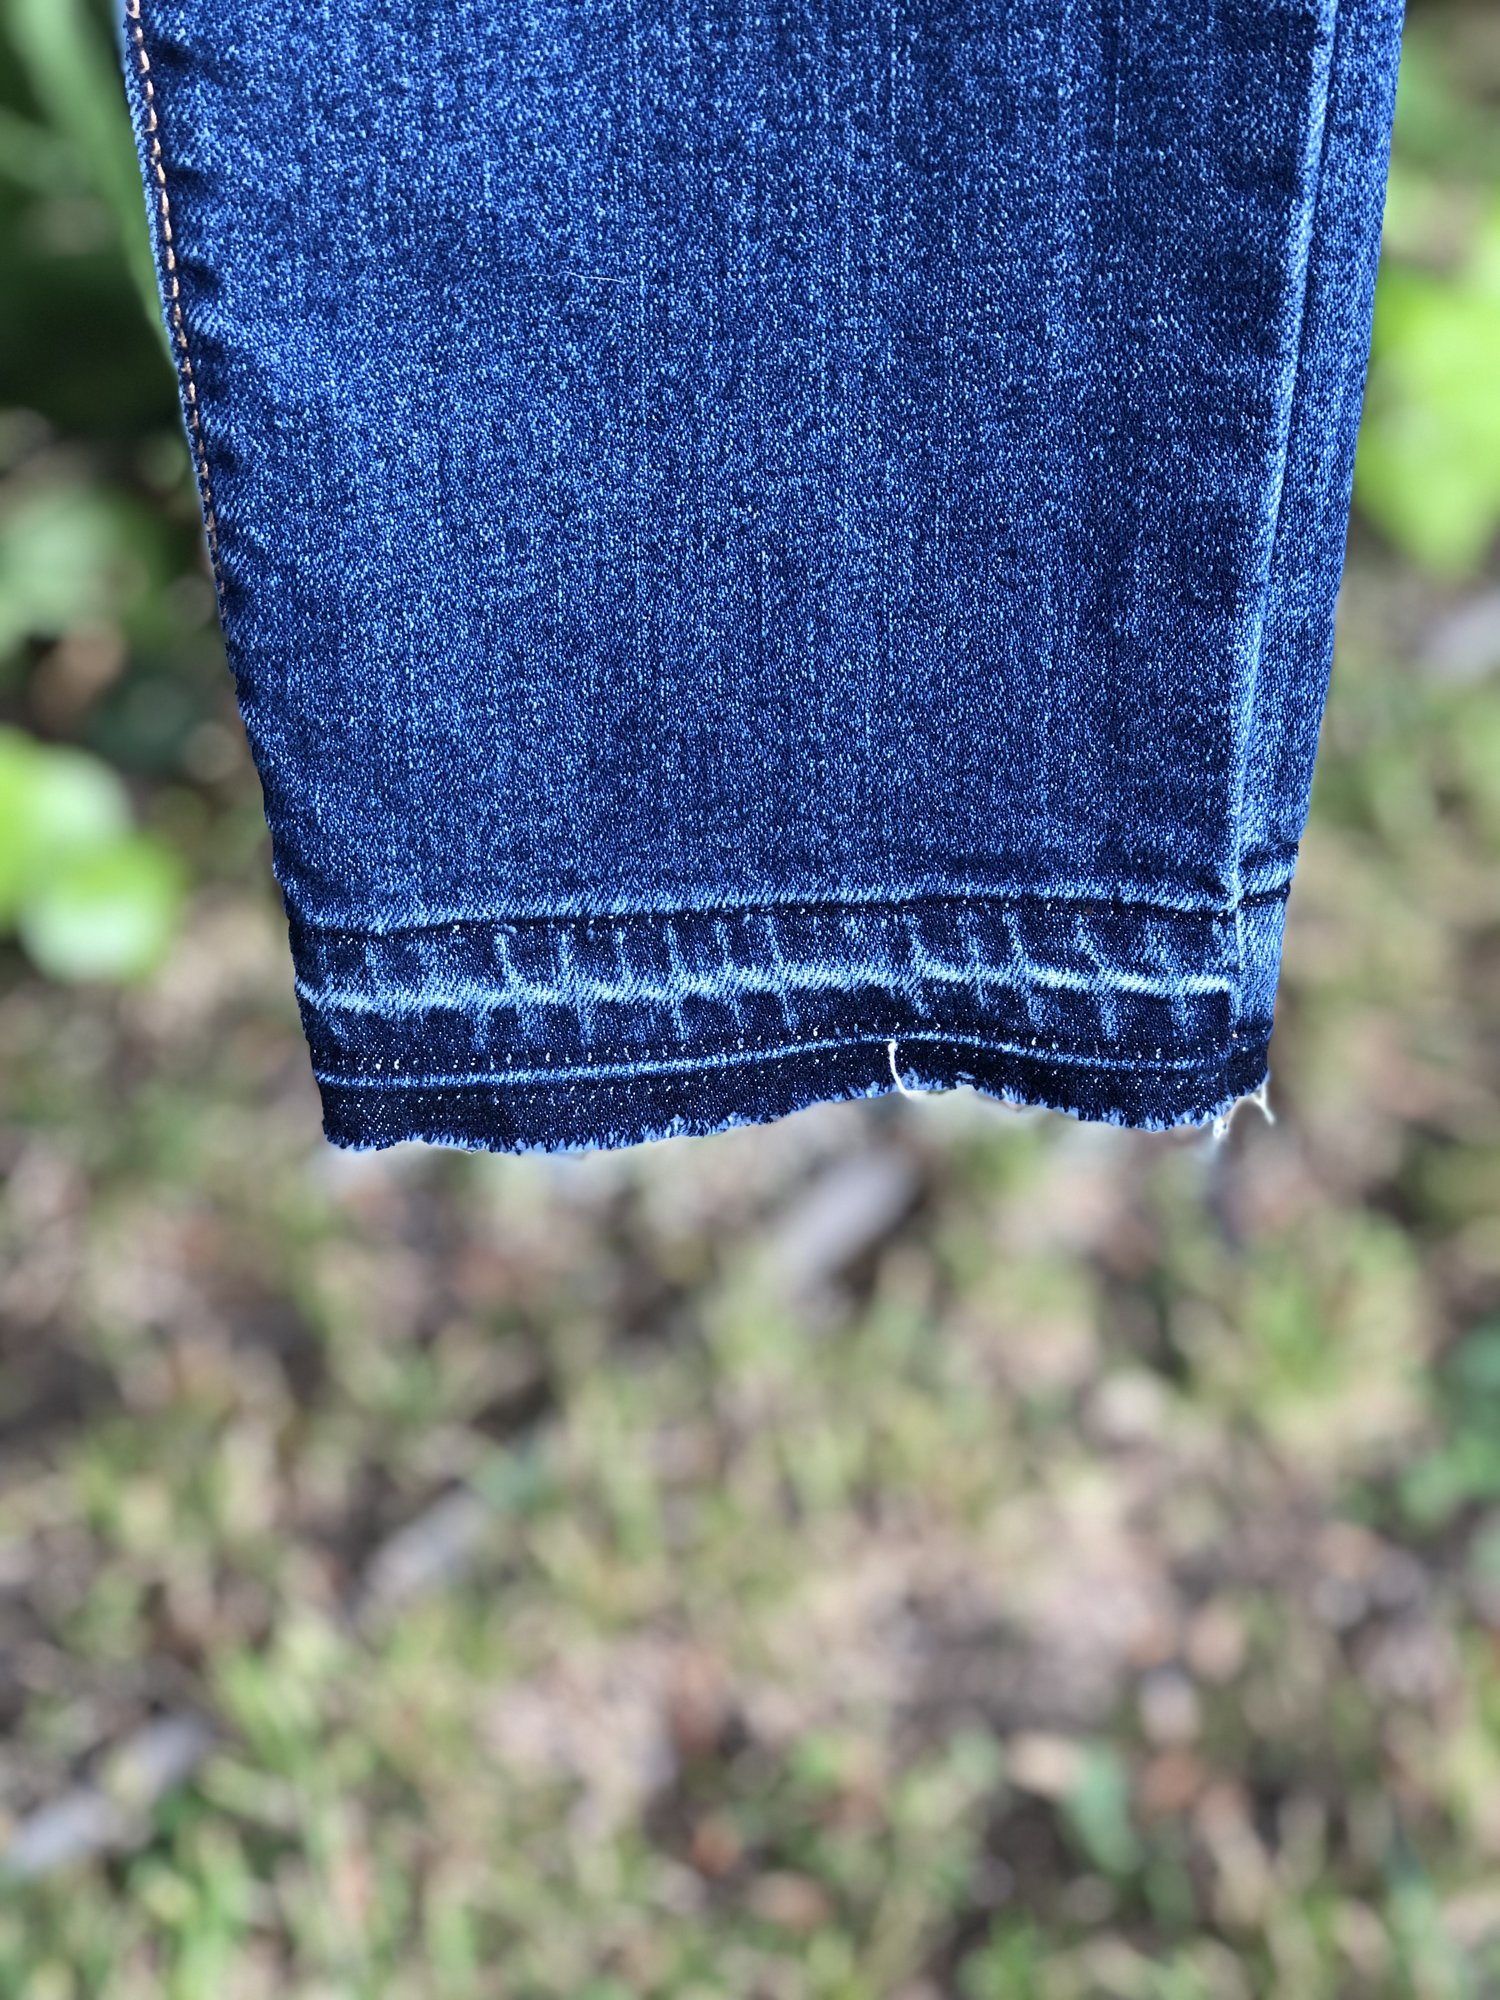 Jeans Patch, Sashiko Embroidery Applique, Boro Denim Patch, Jeans Mend  Repair Patch, Upcycling Jeans Applique 